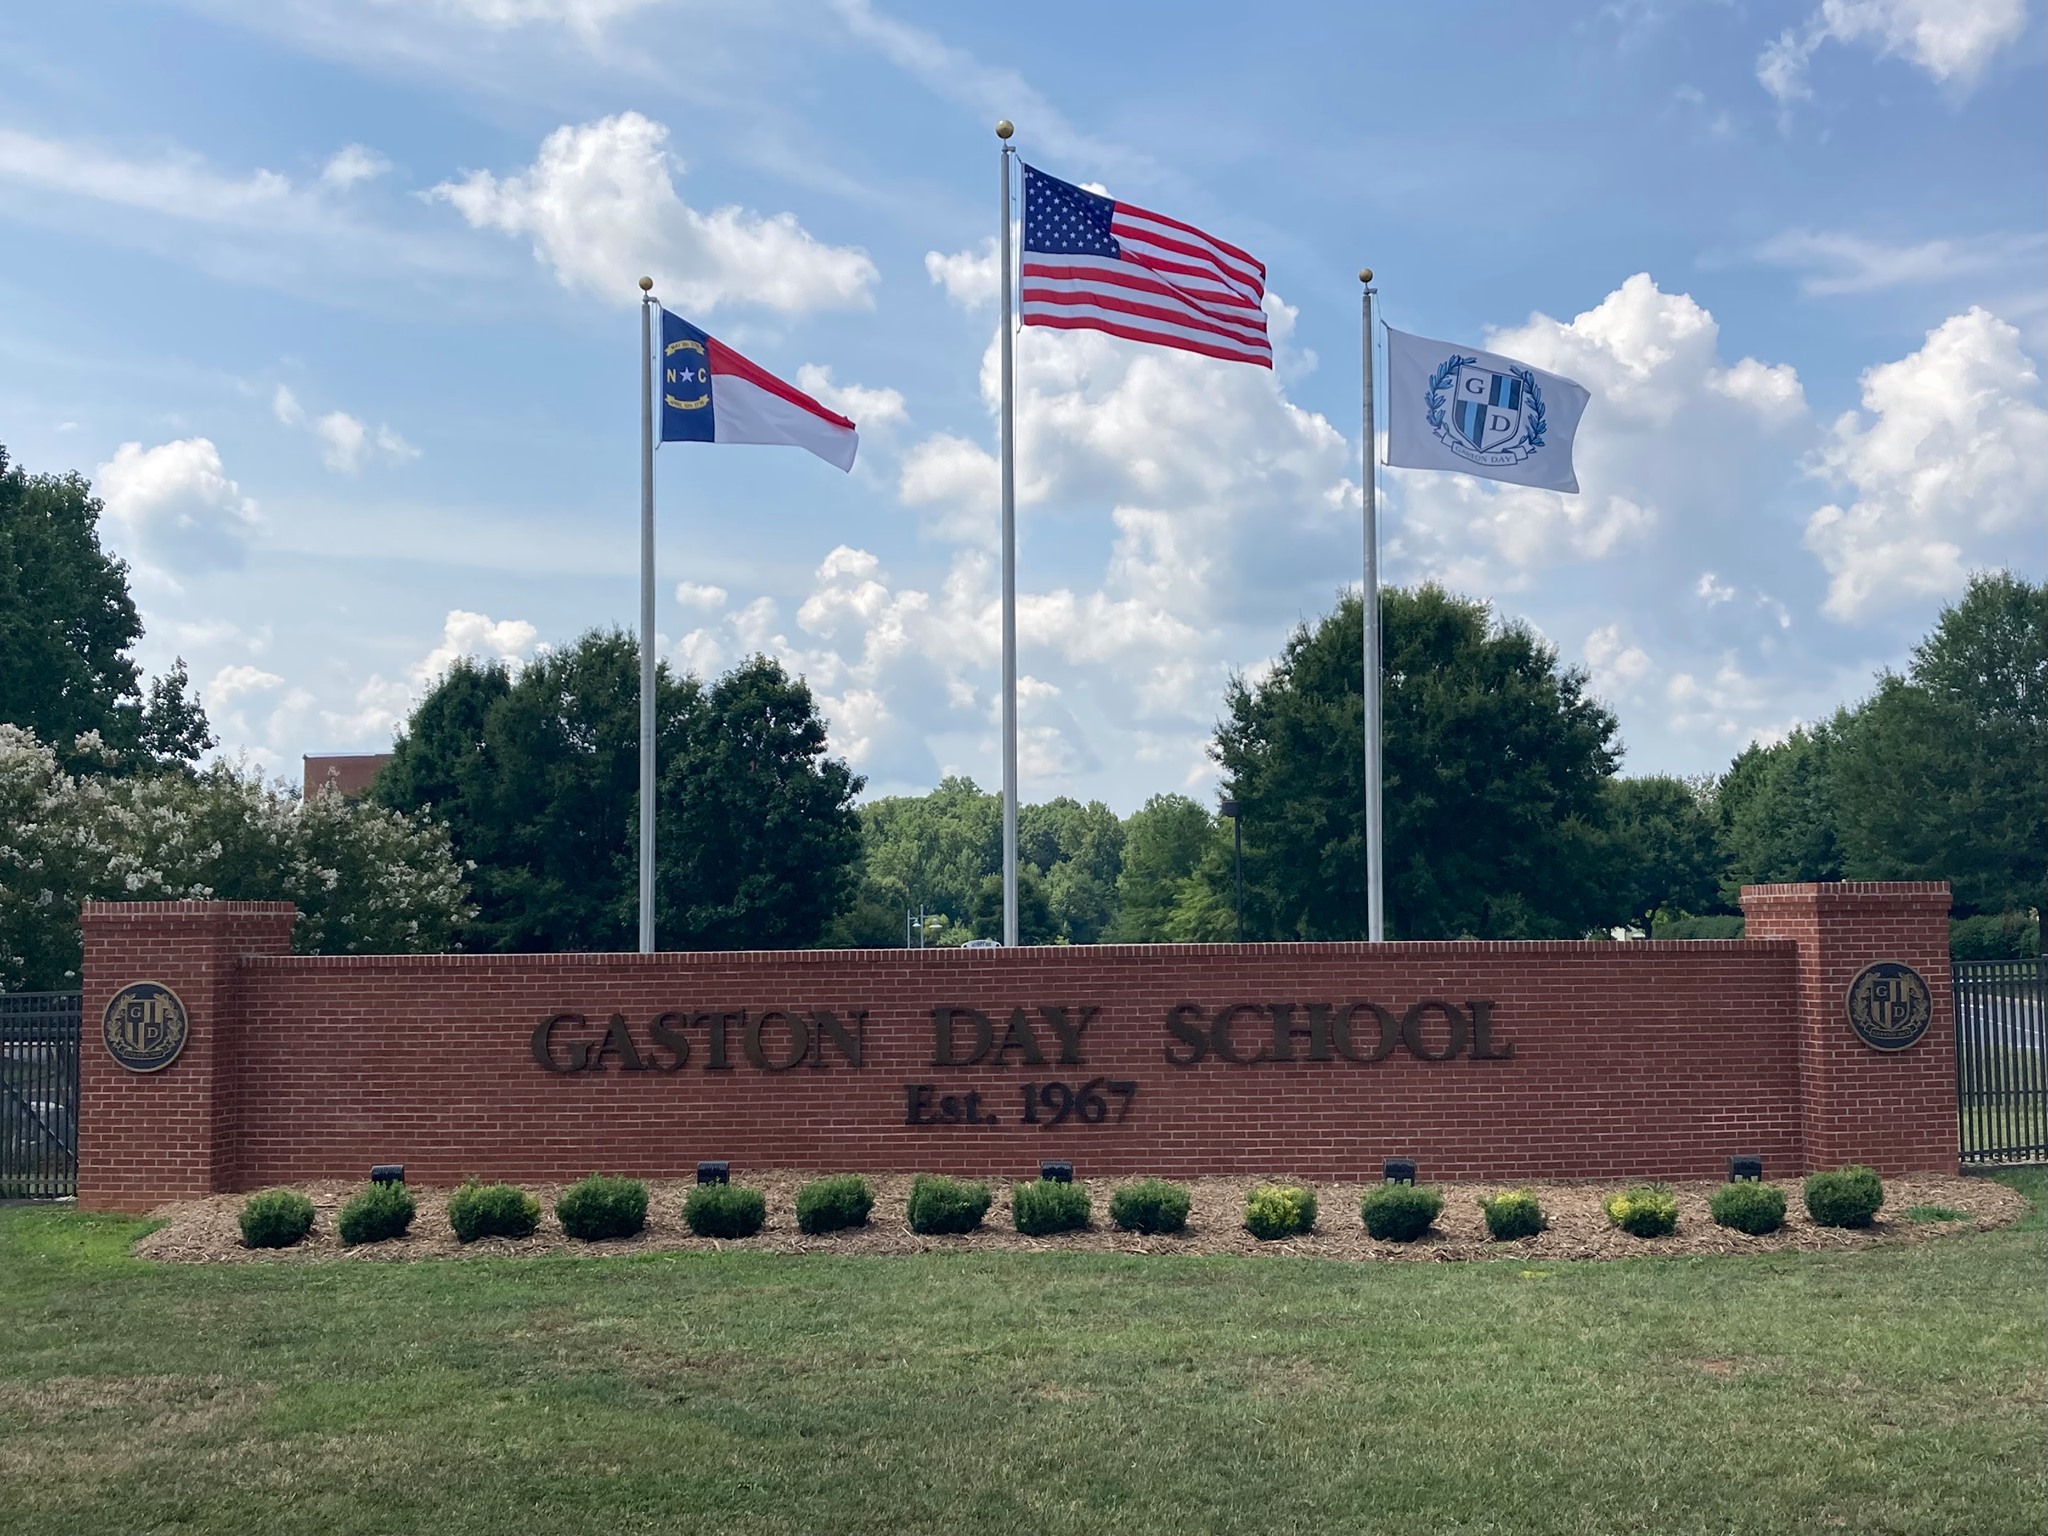 Gaston Day School – Charlotte